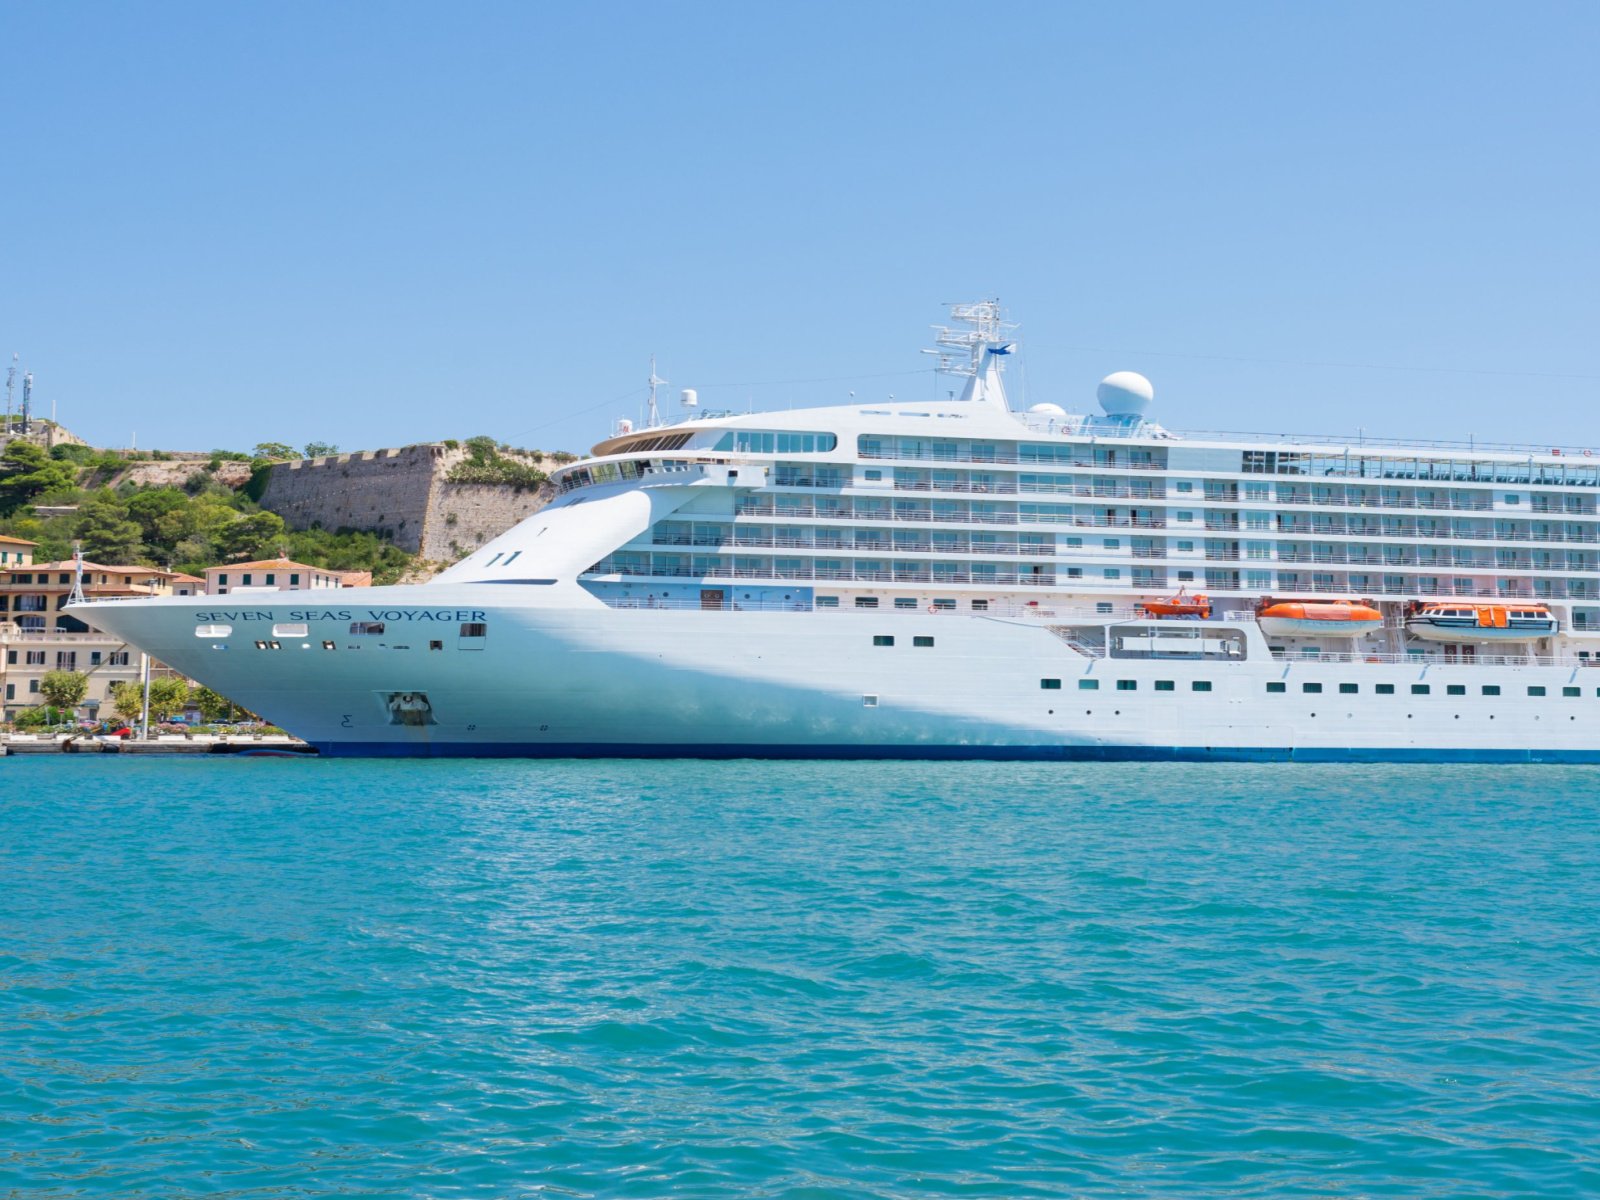 Seven Seas Voyager, a luxury cruise ship in the Regent Seven Seas Cruises fleet